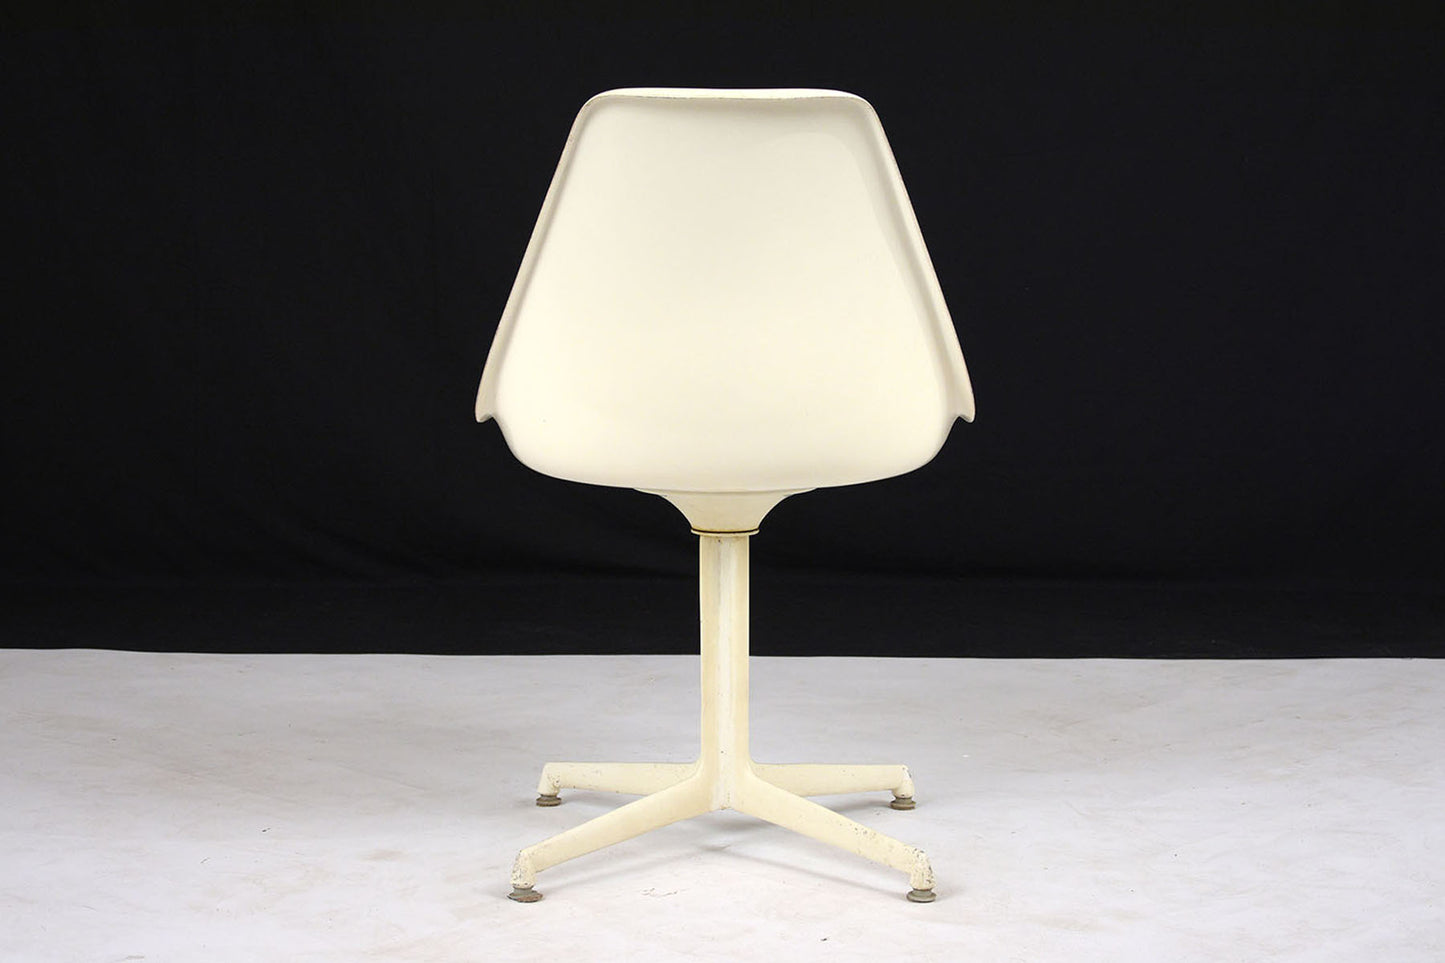 Set of Herman Miller Chairs